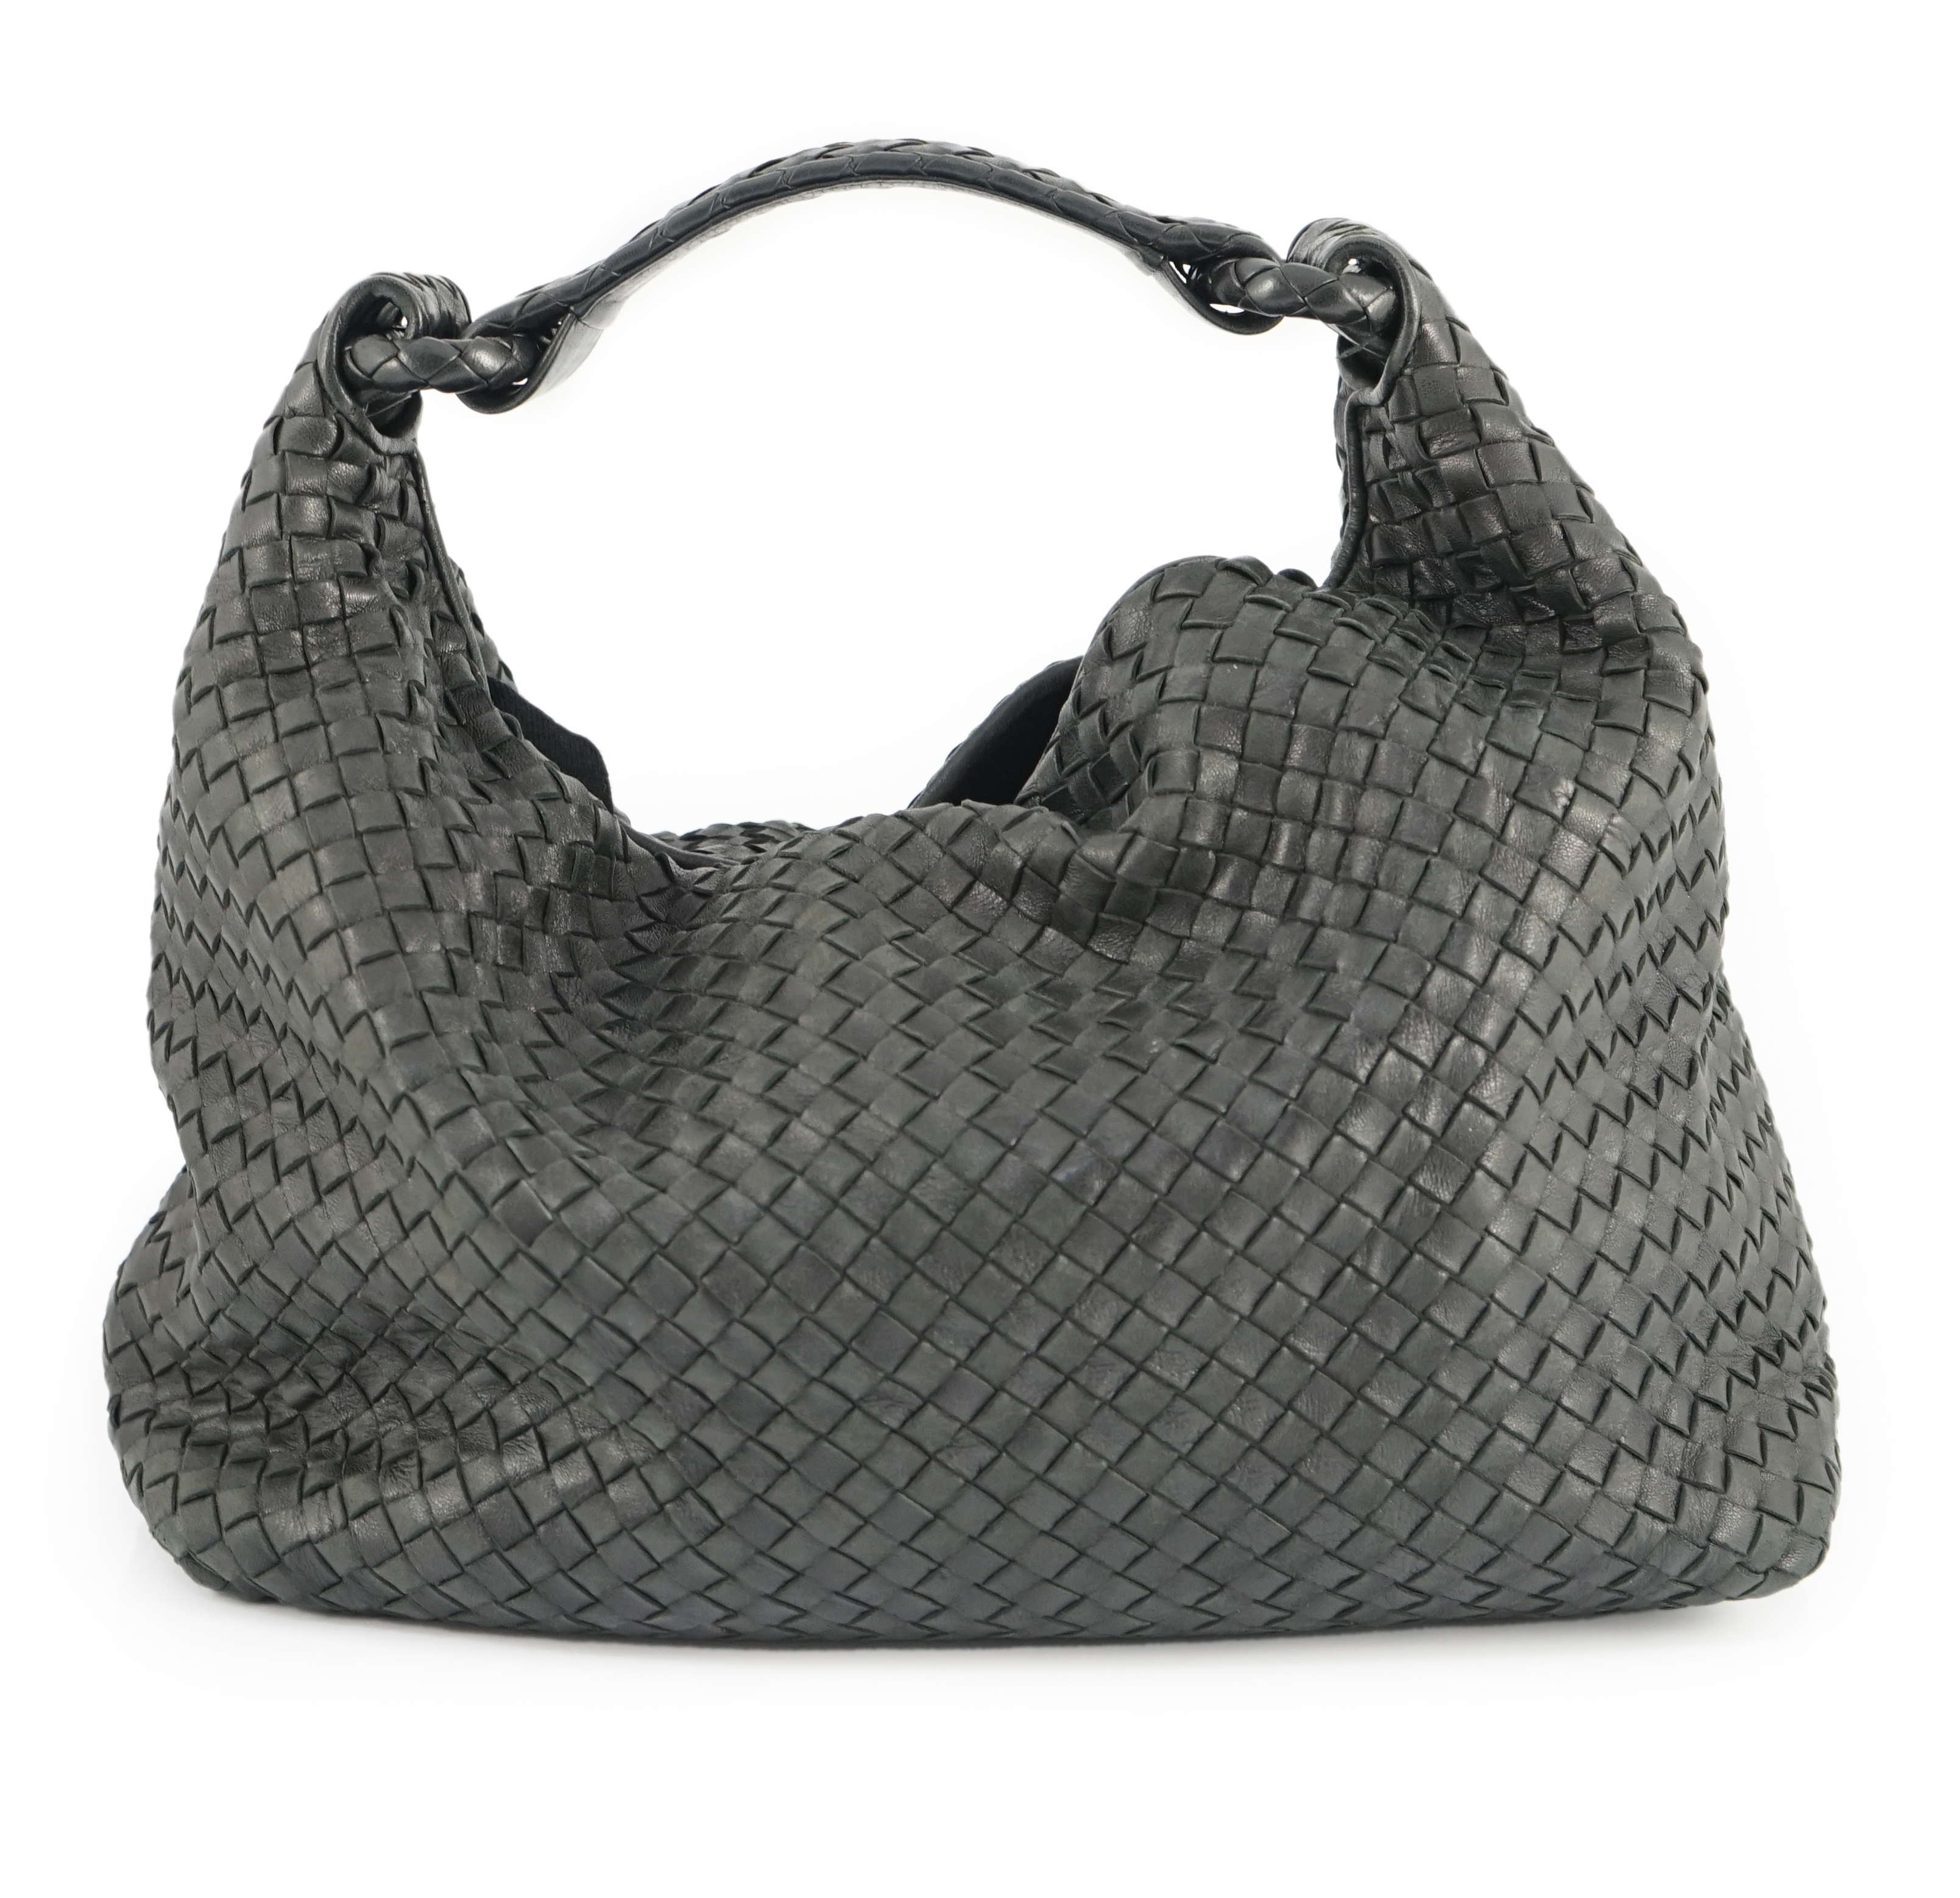 A Bottega Veneta intrecciato-weave medium black leather hobo bag, width 35cm, depth 15cm, height approx. 26cm